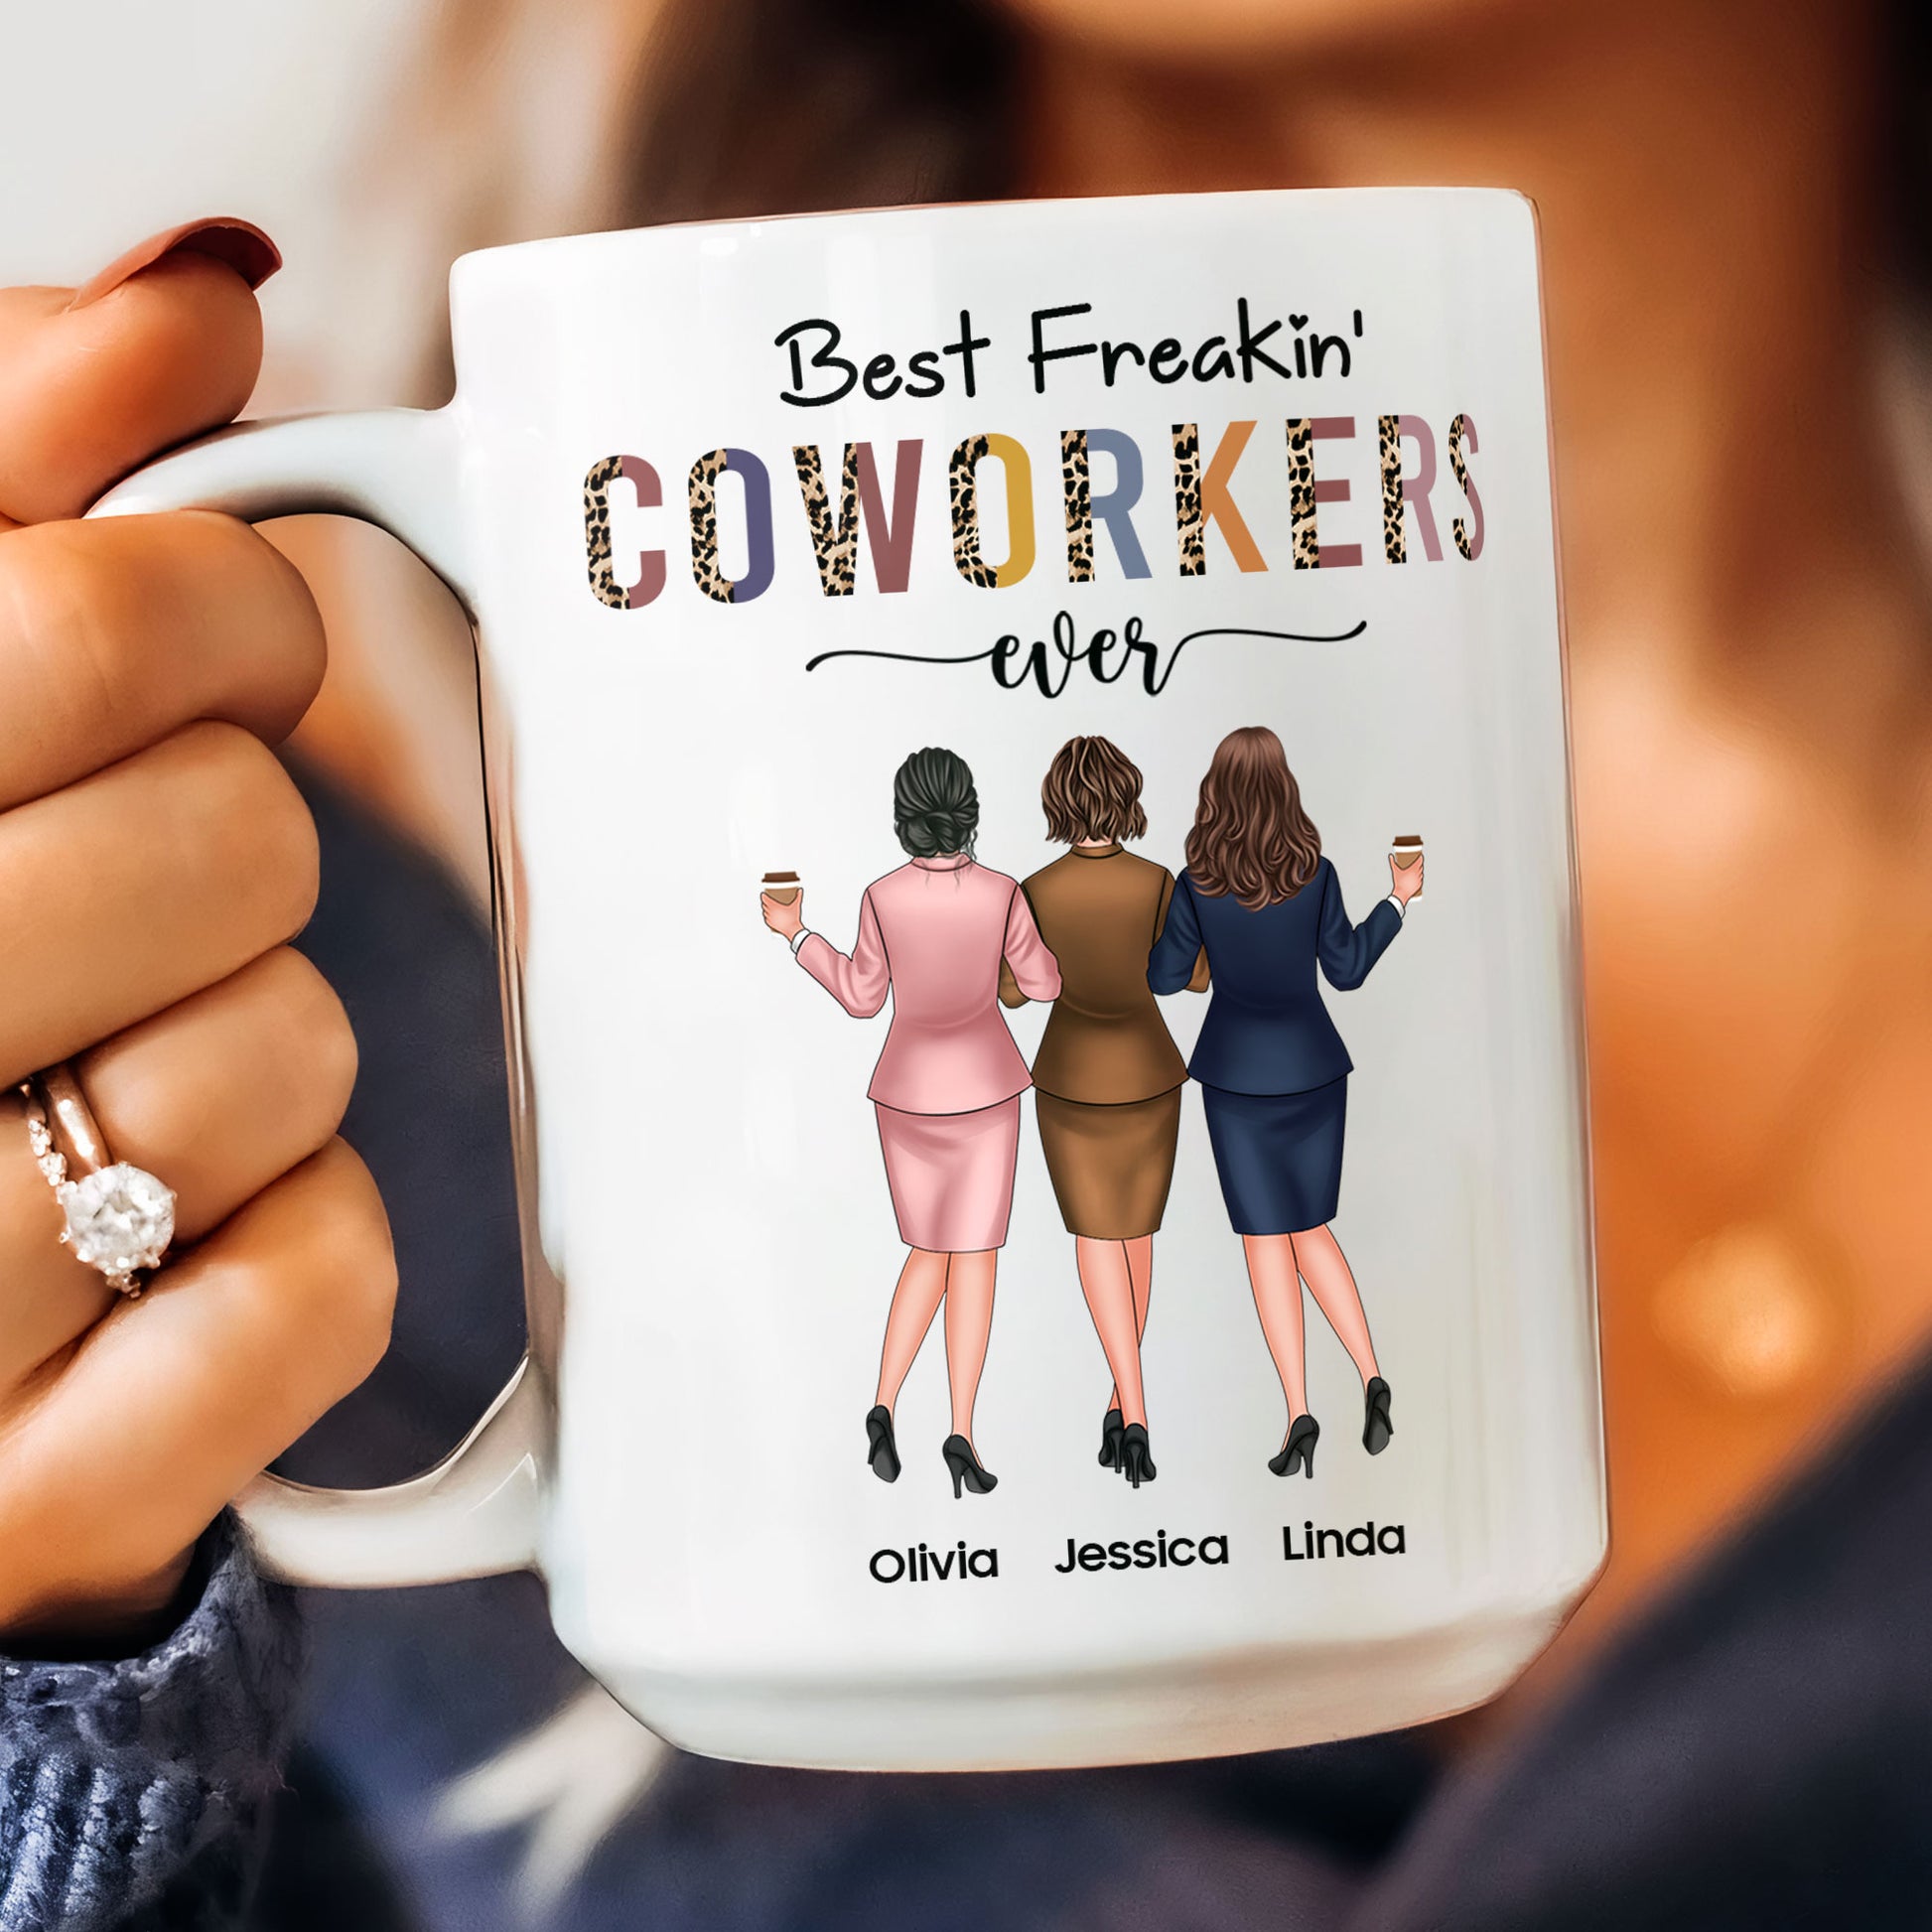 Work Made Us Coworkers - Personalized Mug - Gift For Work Besties, Col –  Macorner